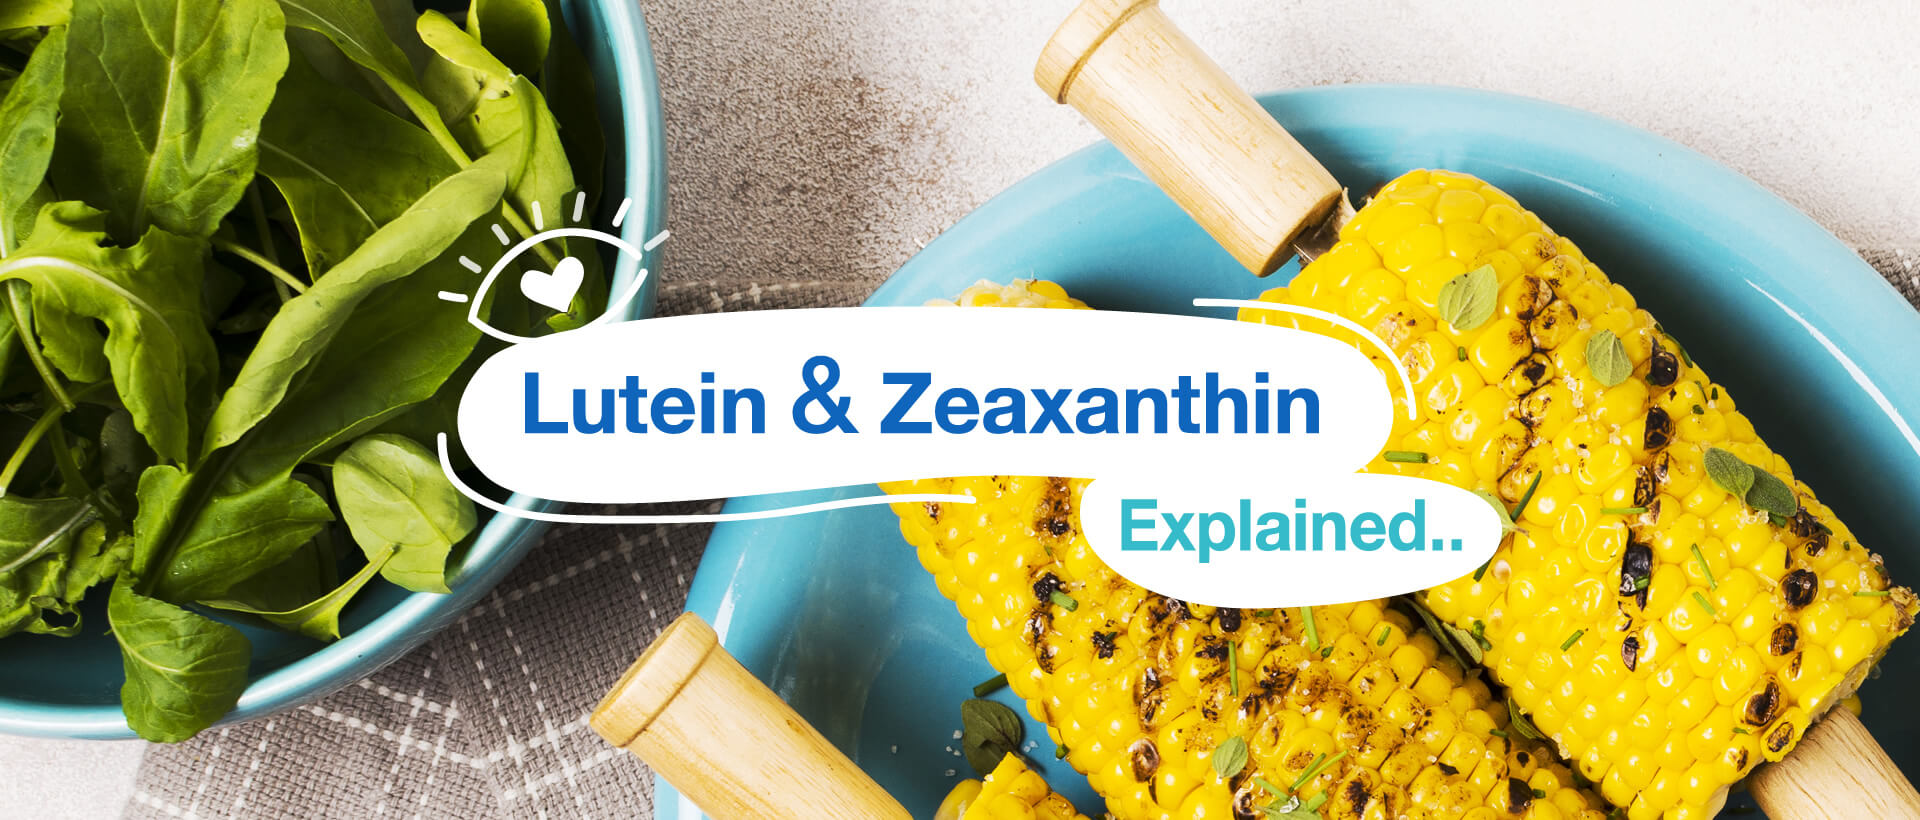 Lutein & zeaxanthin explained